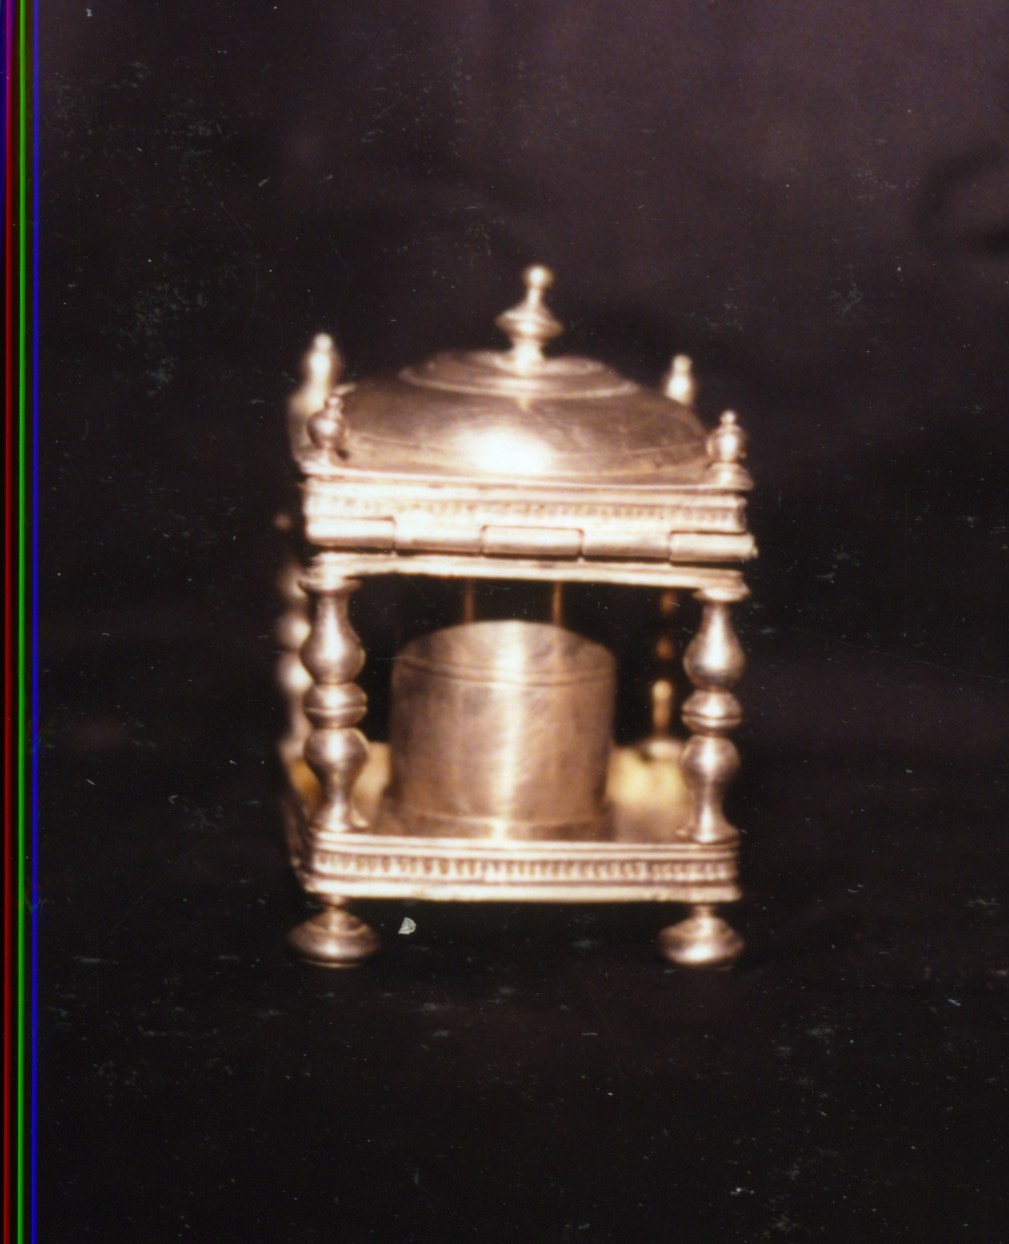 custodia - di vasetti per oli santi - bottega sarda (sec. XVIII)